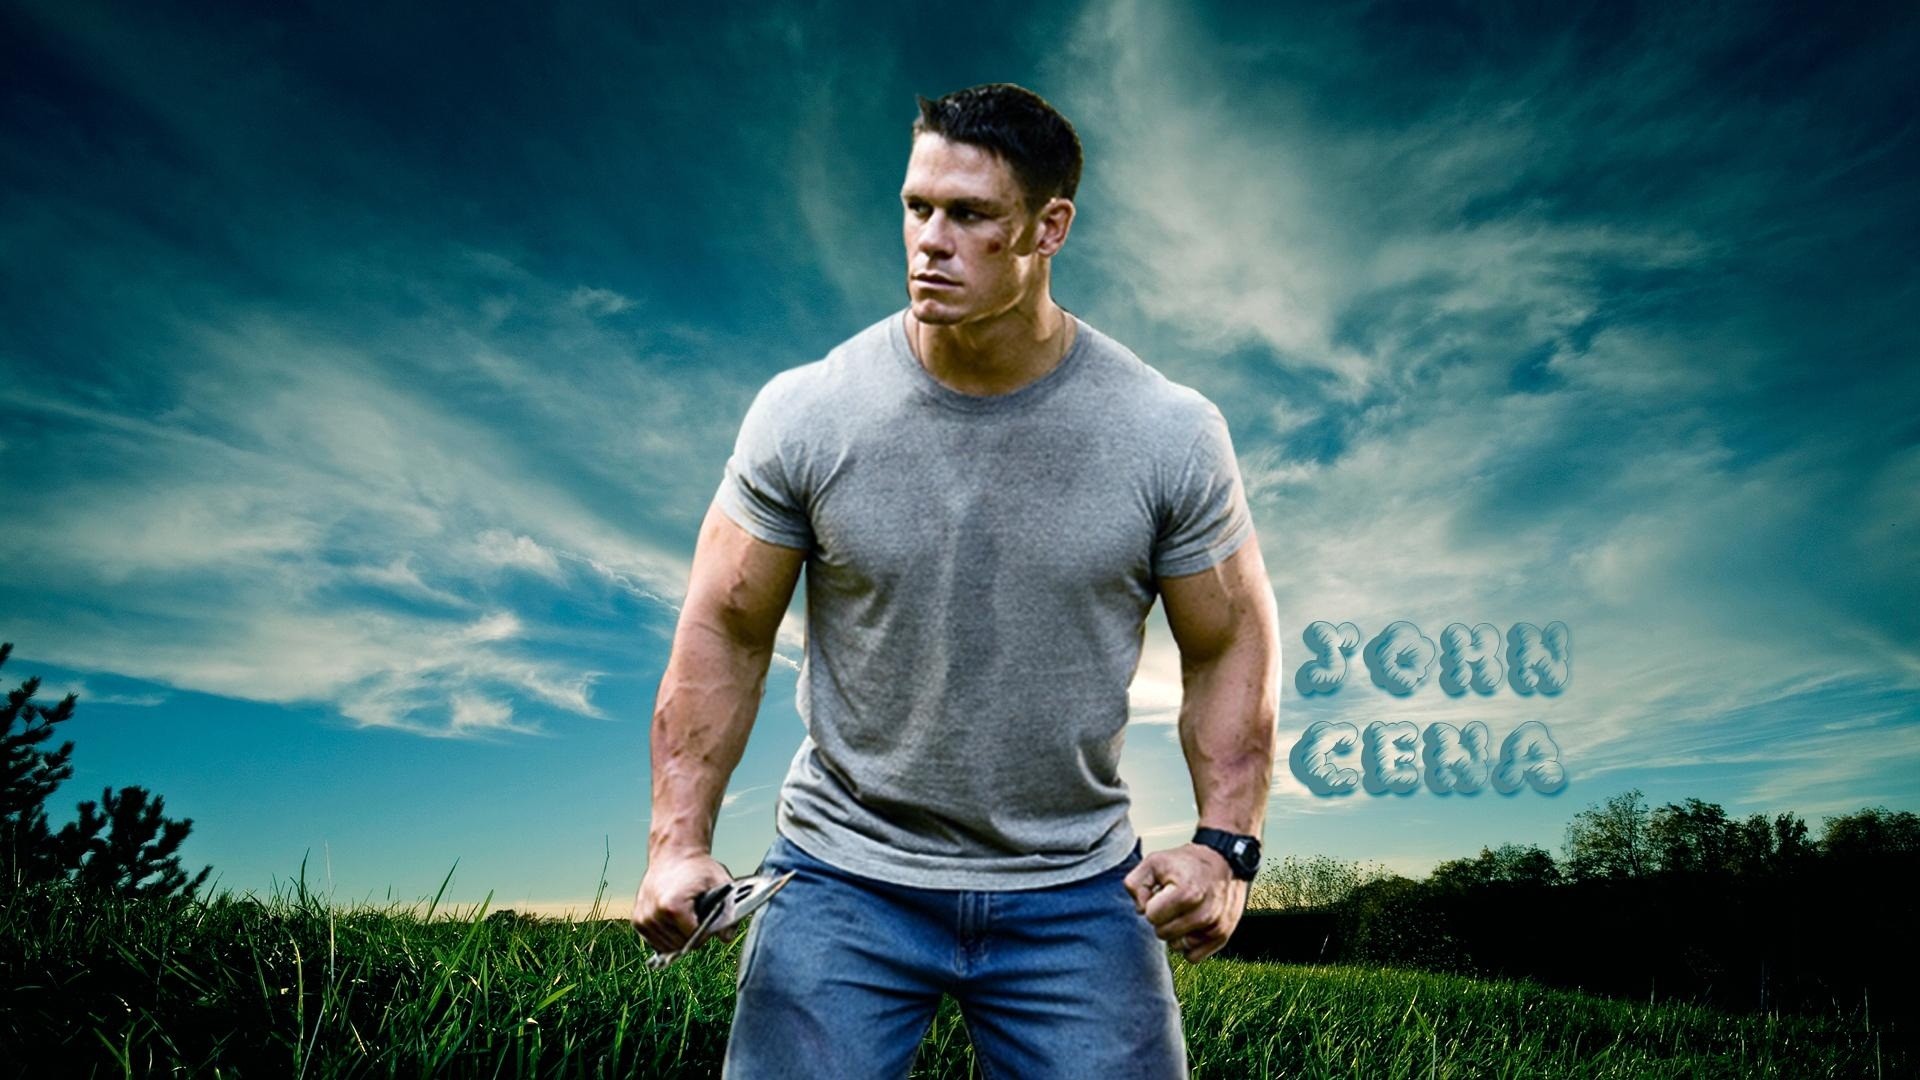 WWE John Cena Wallpapers 2016 HD for free download